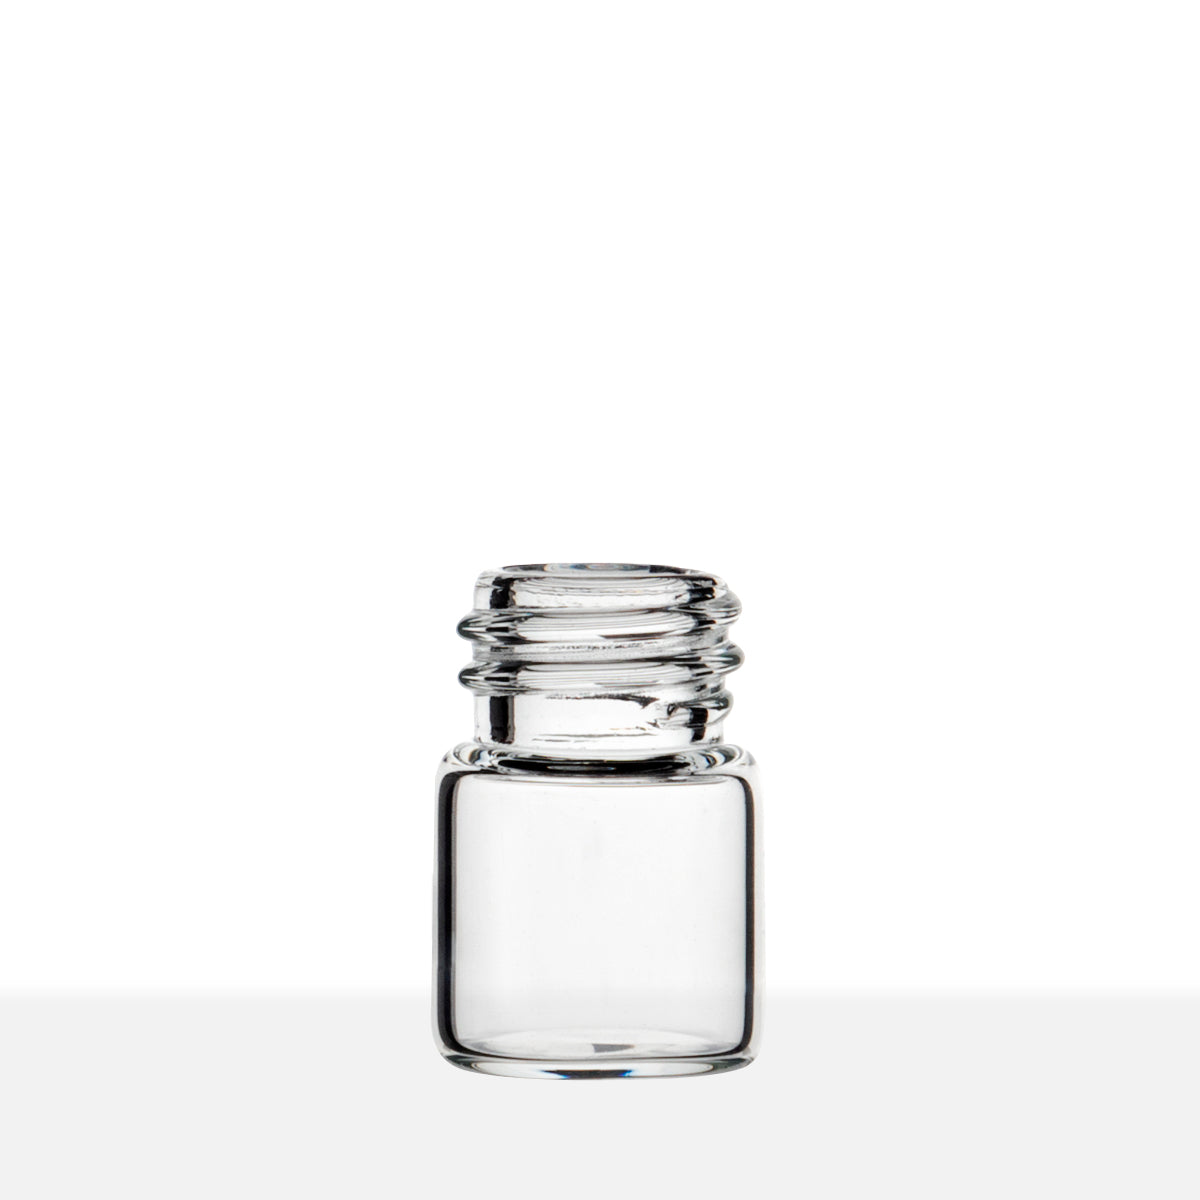 SCREW THREAD GLASS VIALS - CLEAR Item #:VC131522G